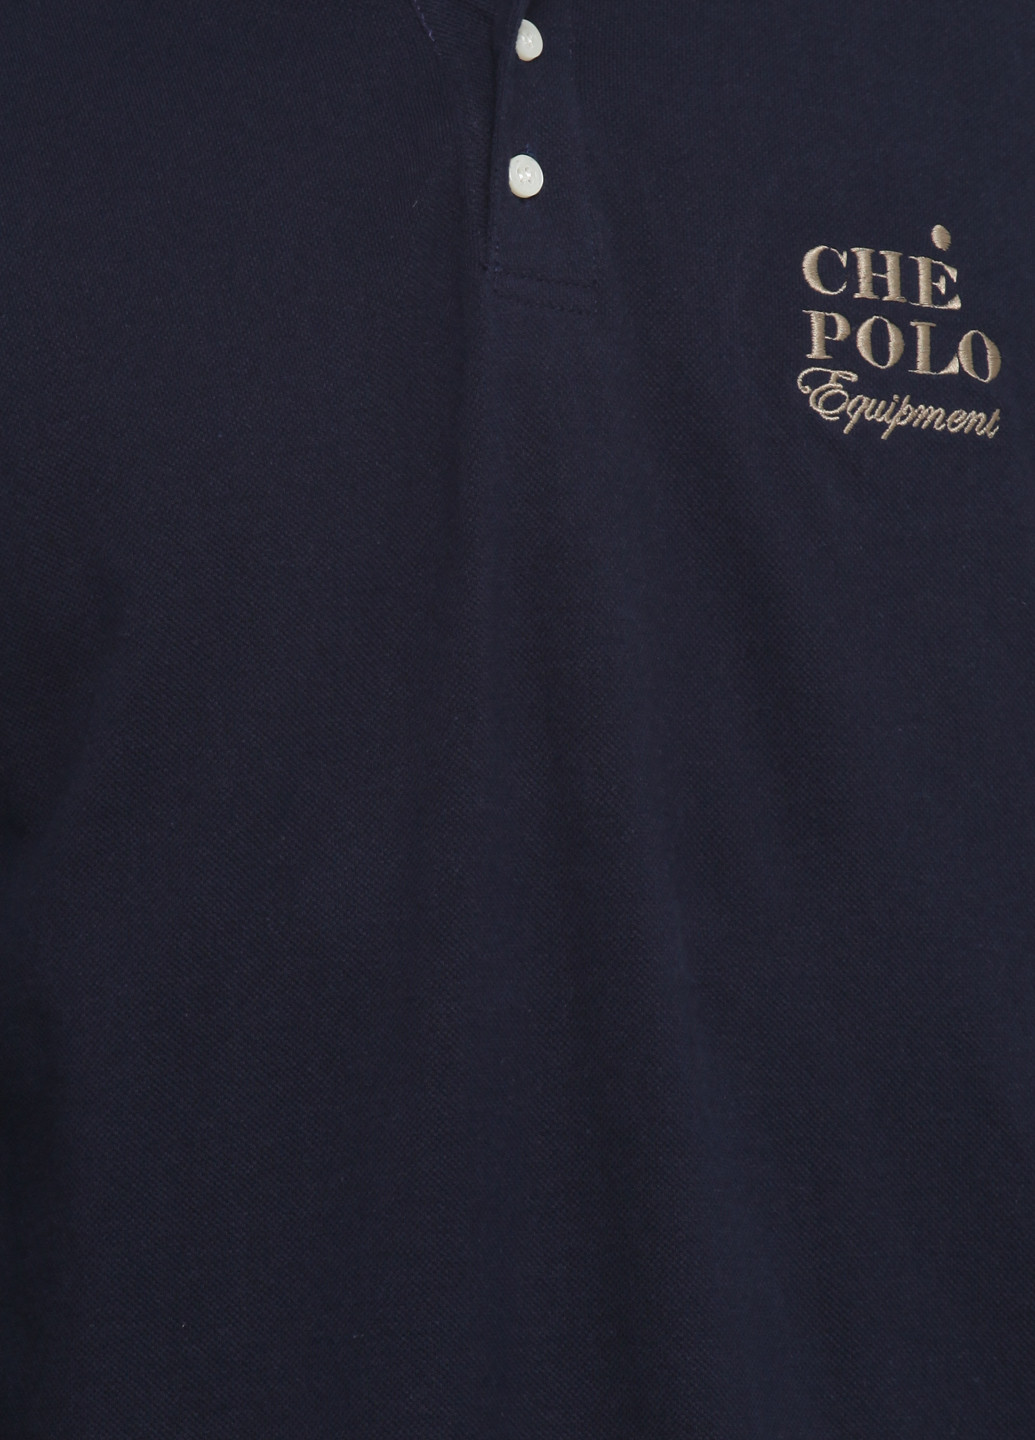 Темно-синяя футболка-поло для мужчин Equipment с надписью